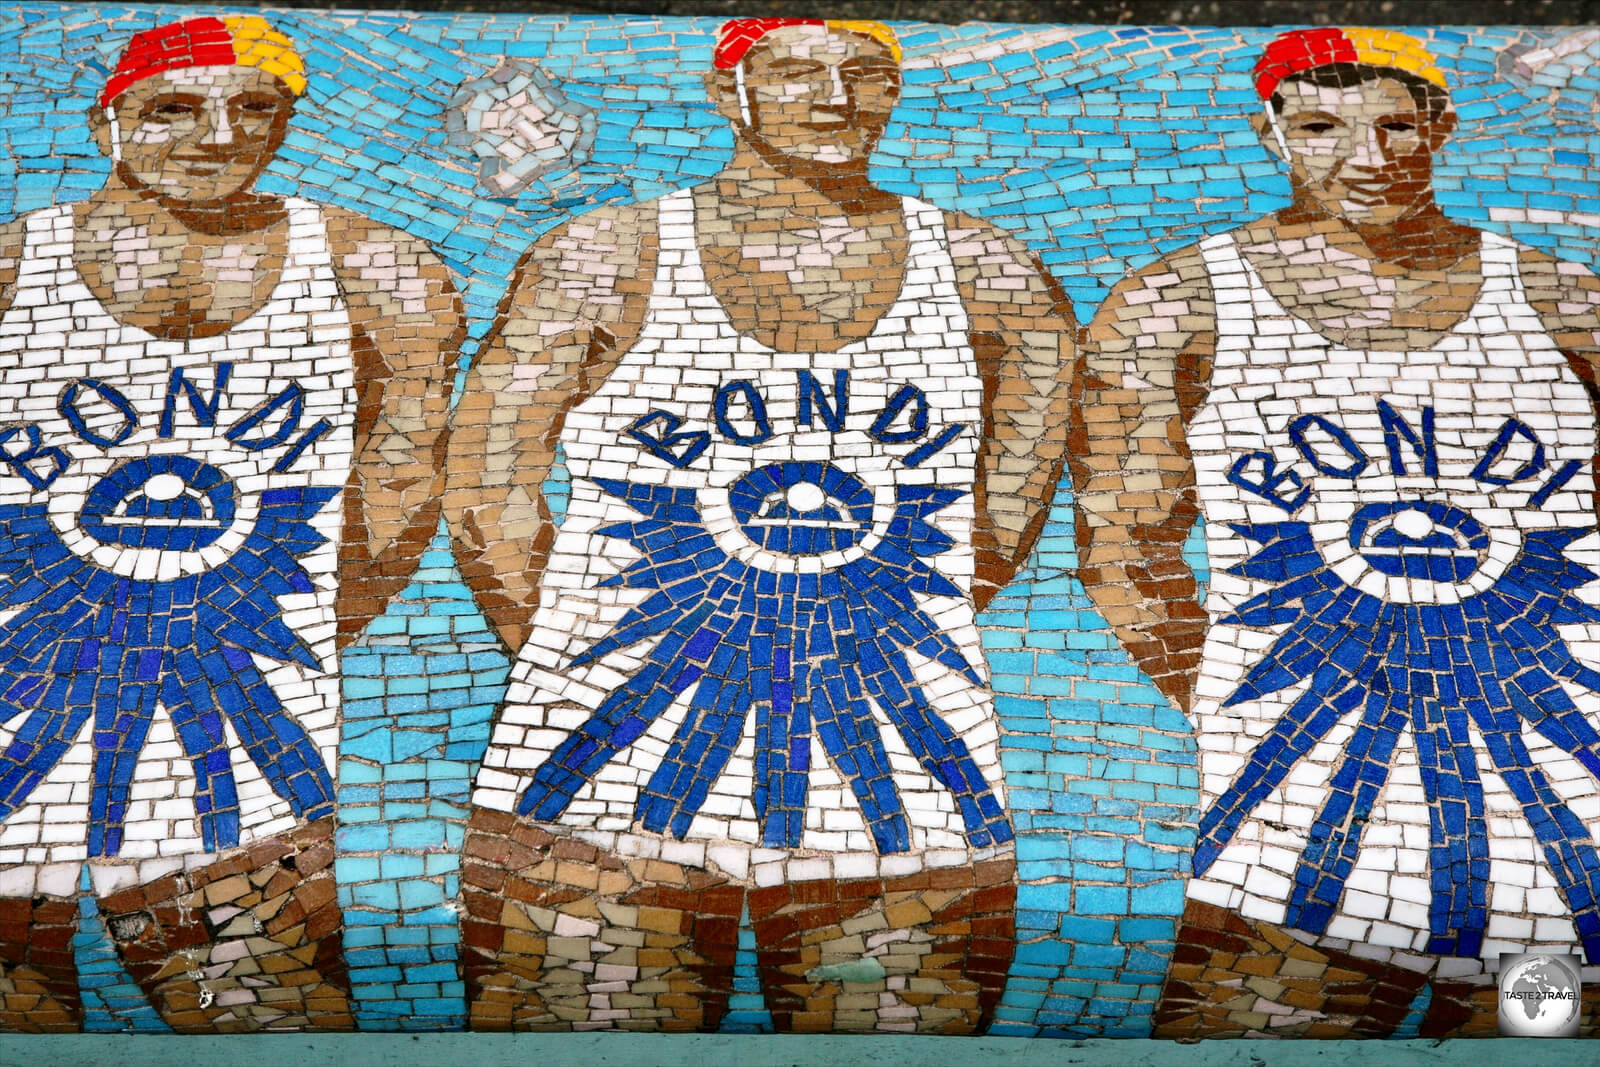 Mosaic tile artwork at Bondi Beach, Sydney, Australia